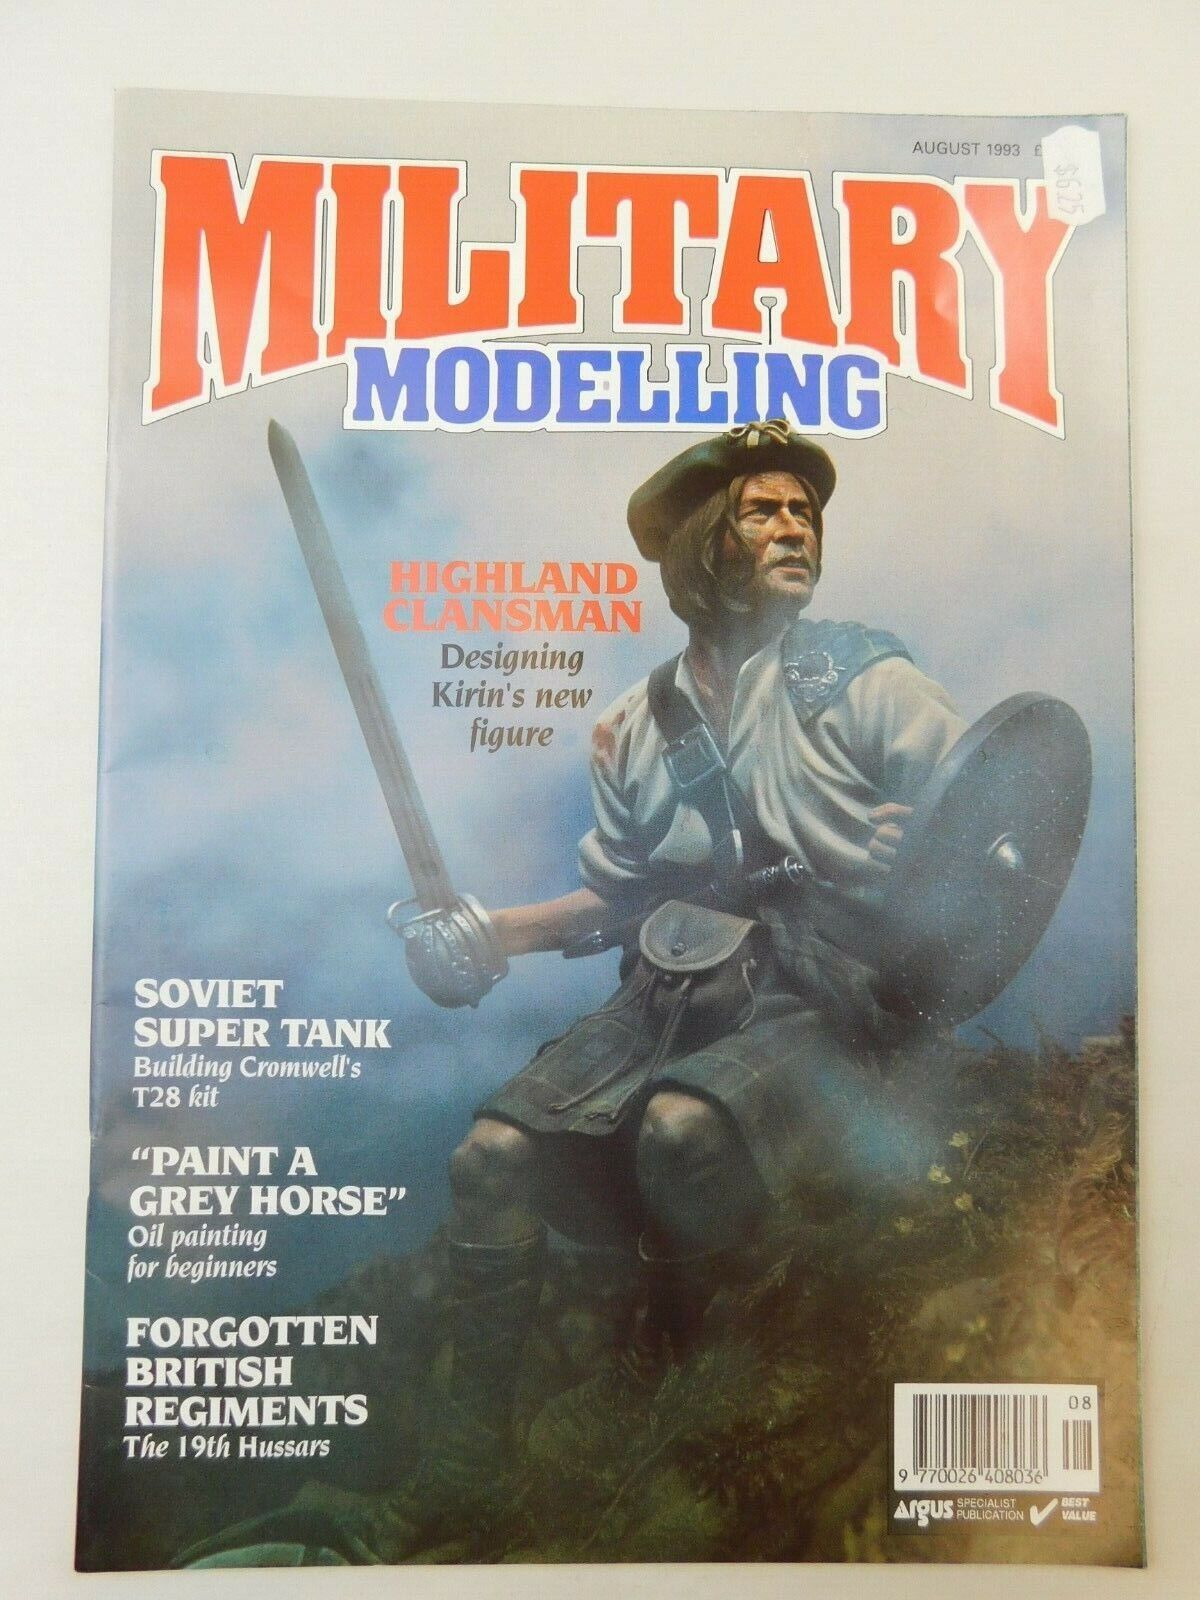 Military Modeling Highland Clansman Soviet Super Tank AUG 1993 Vintage Magazine